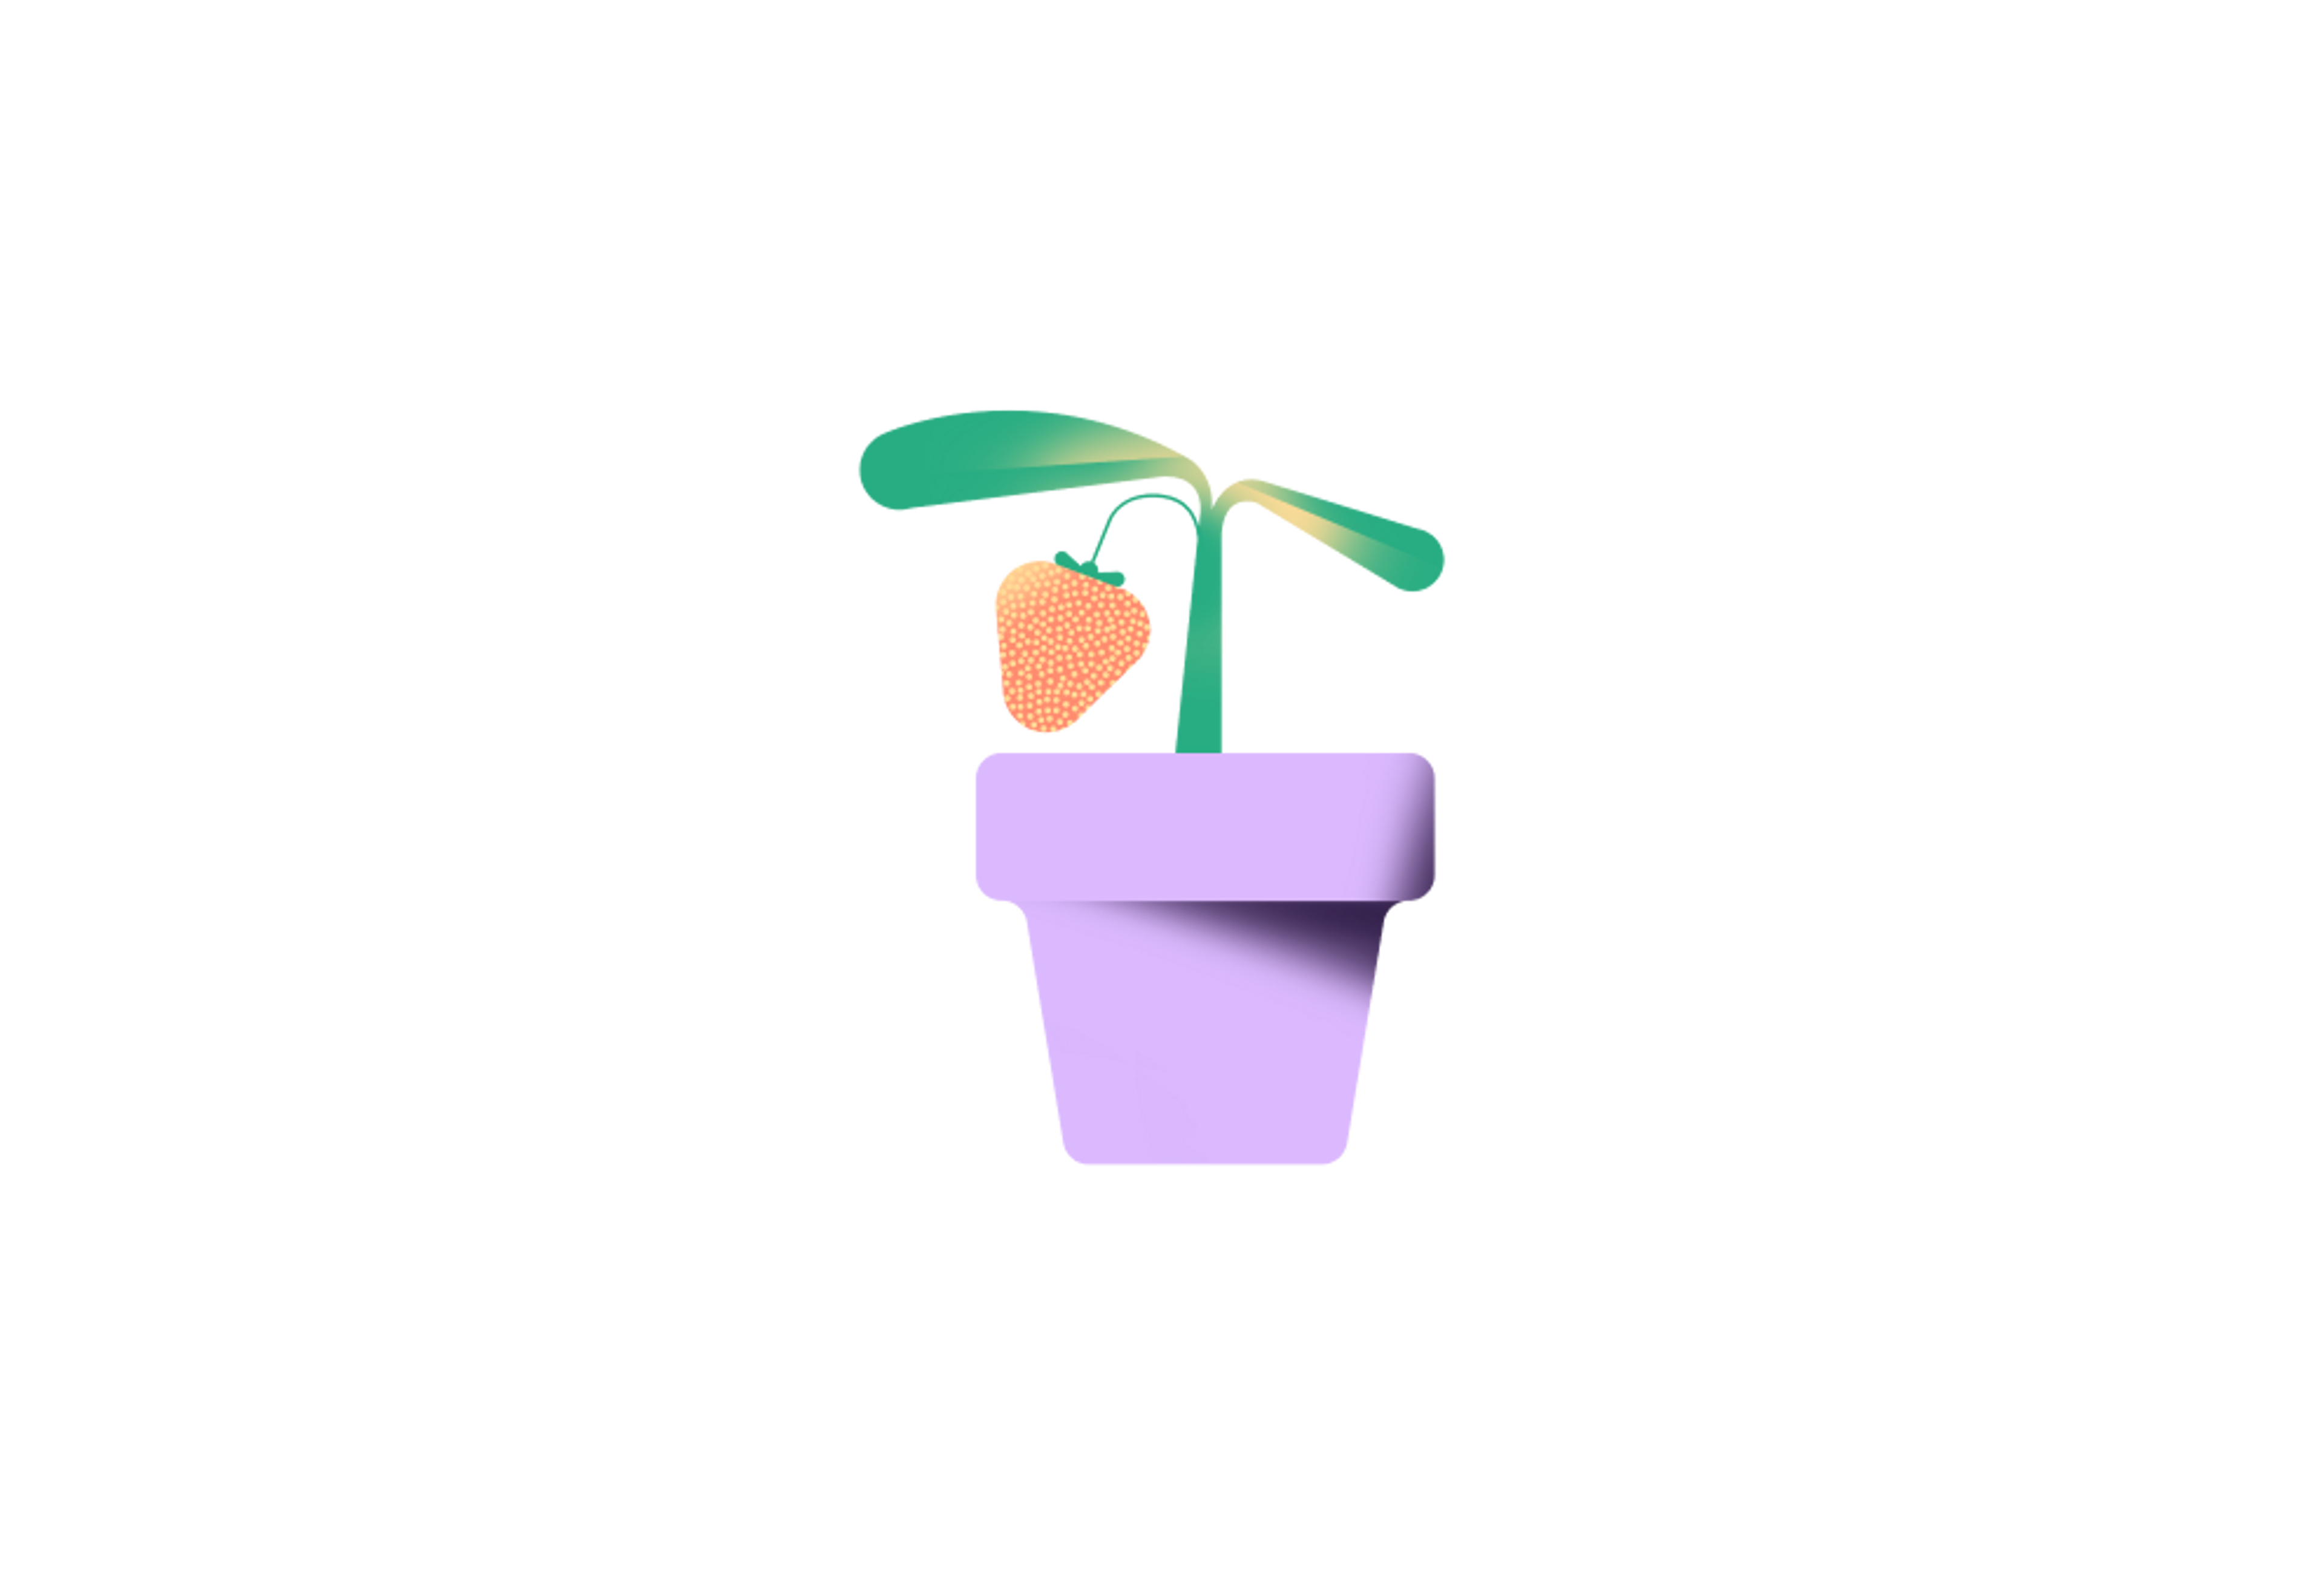 Plante